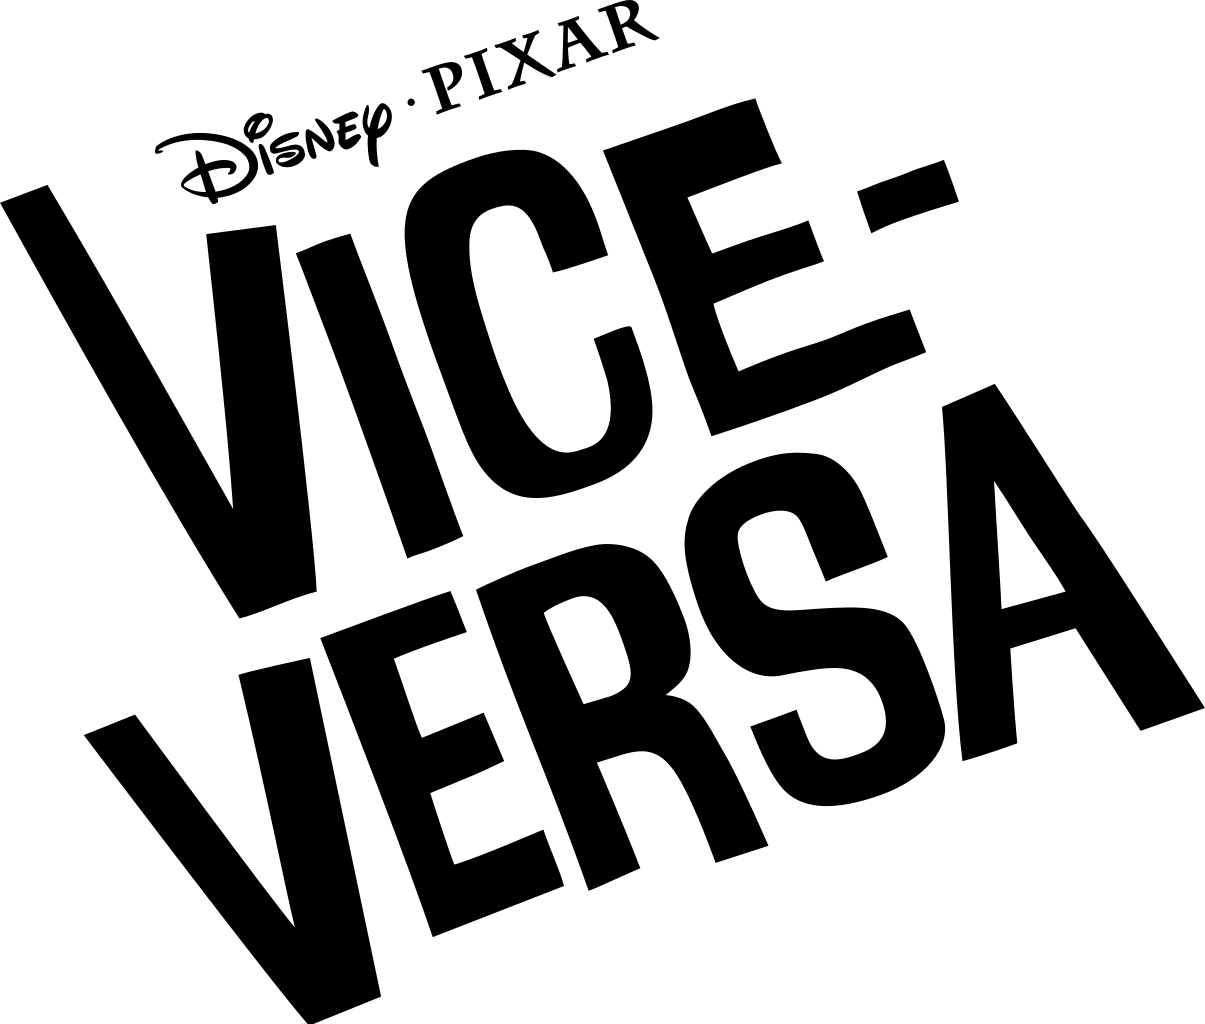 File:Vice-versa (film, 2015) logo.svg - Wikimedia Commons